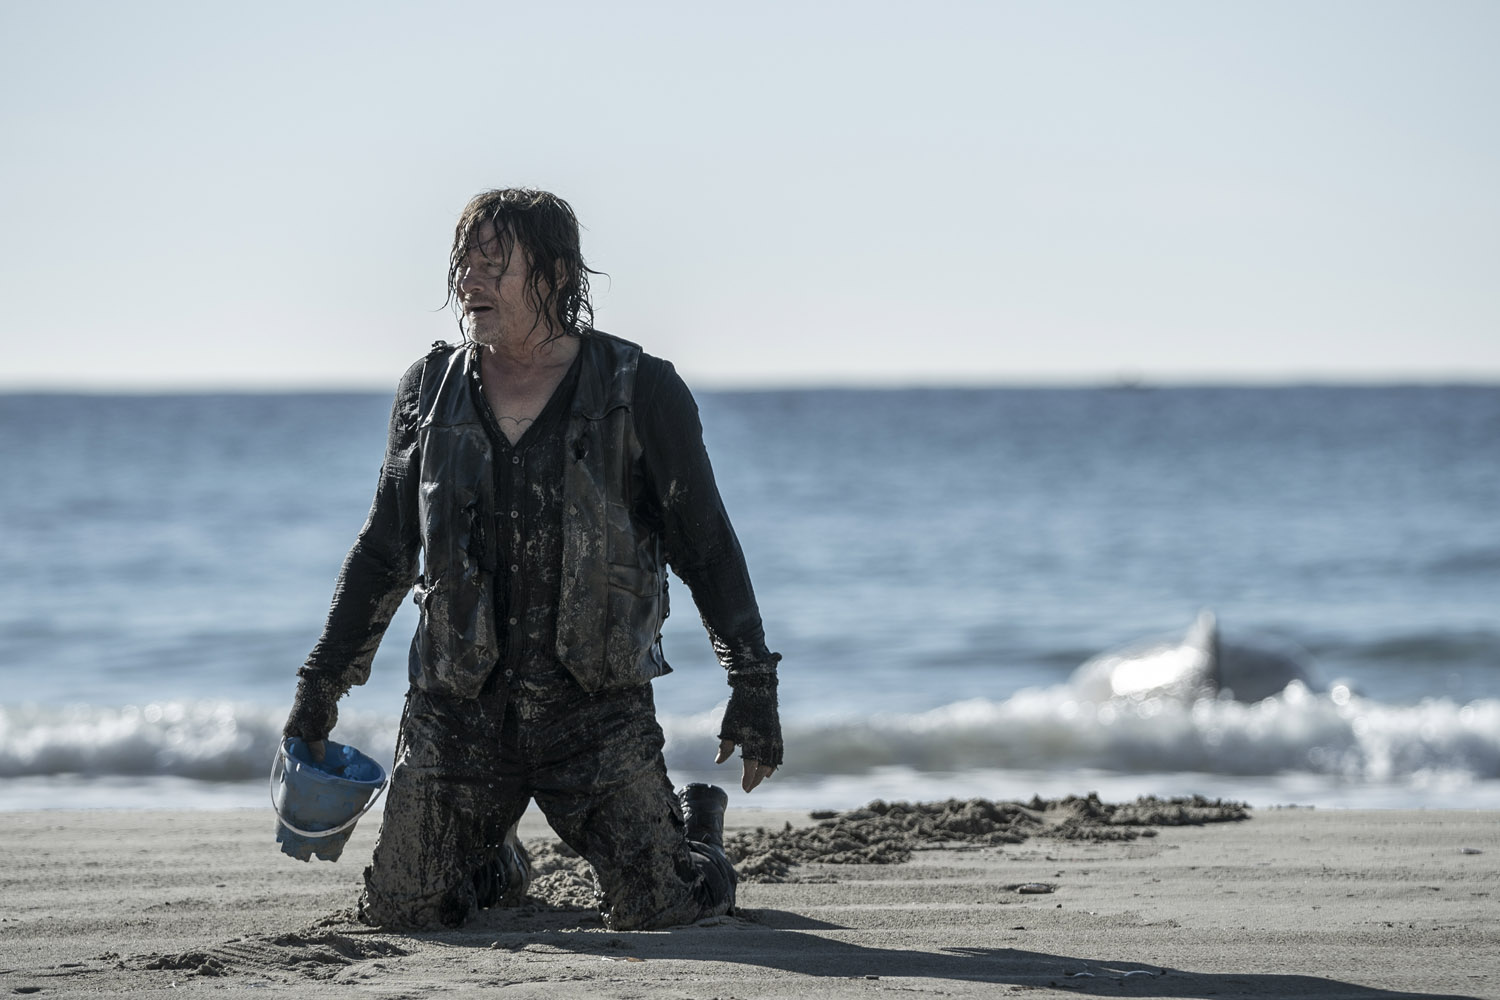 The Walking Dead: Daryl Dixon "L'ame Perdue" - 1 серия 1 сезона